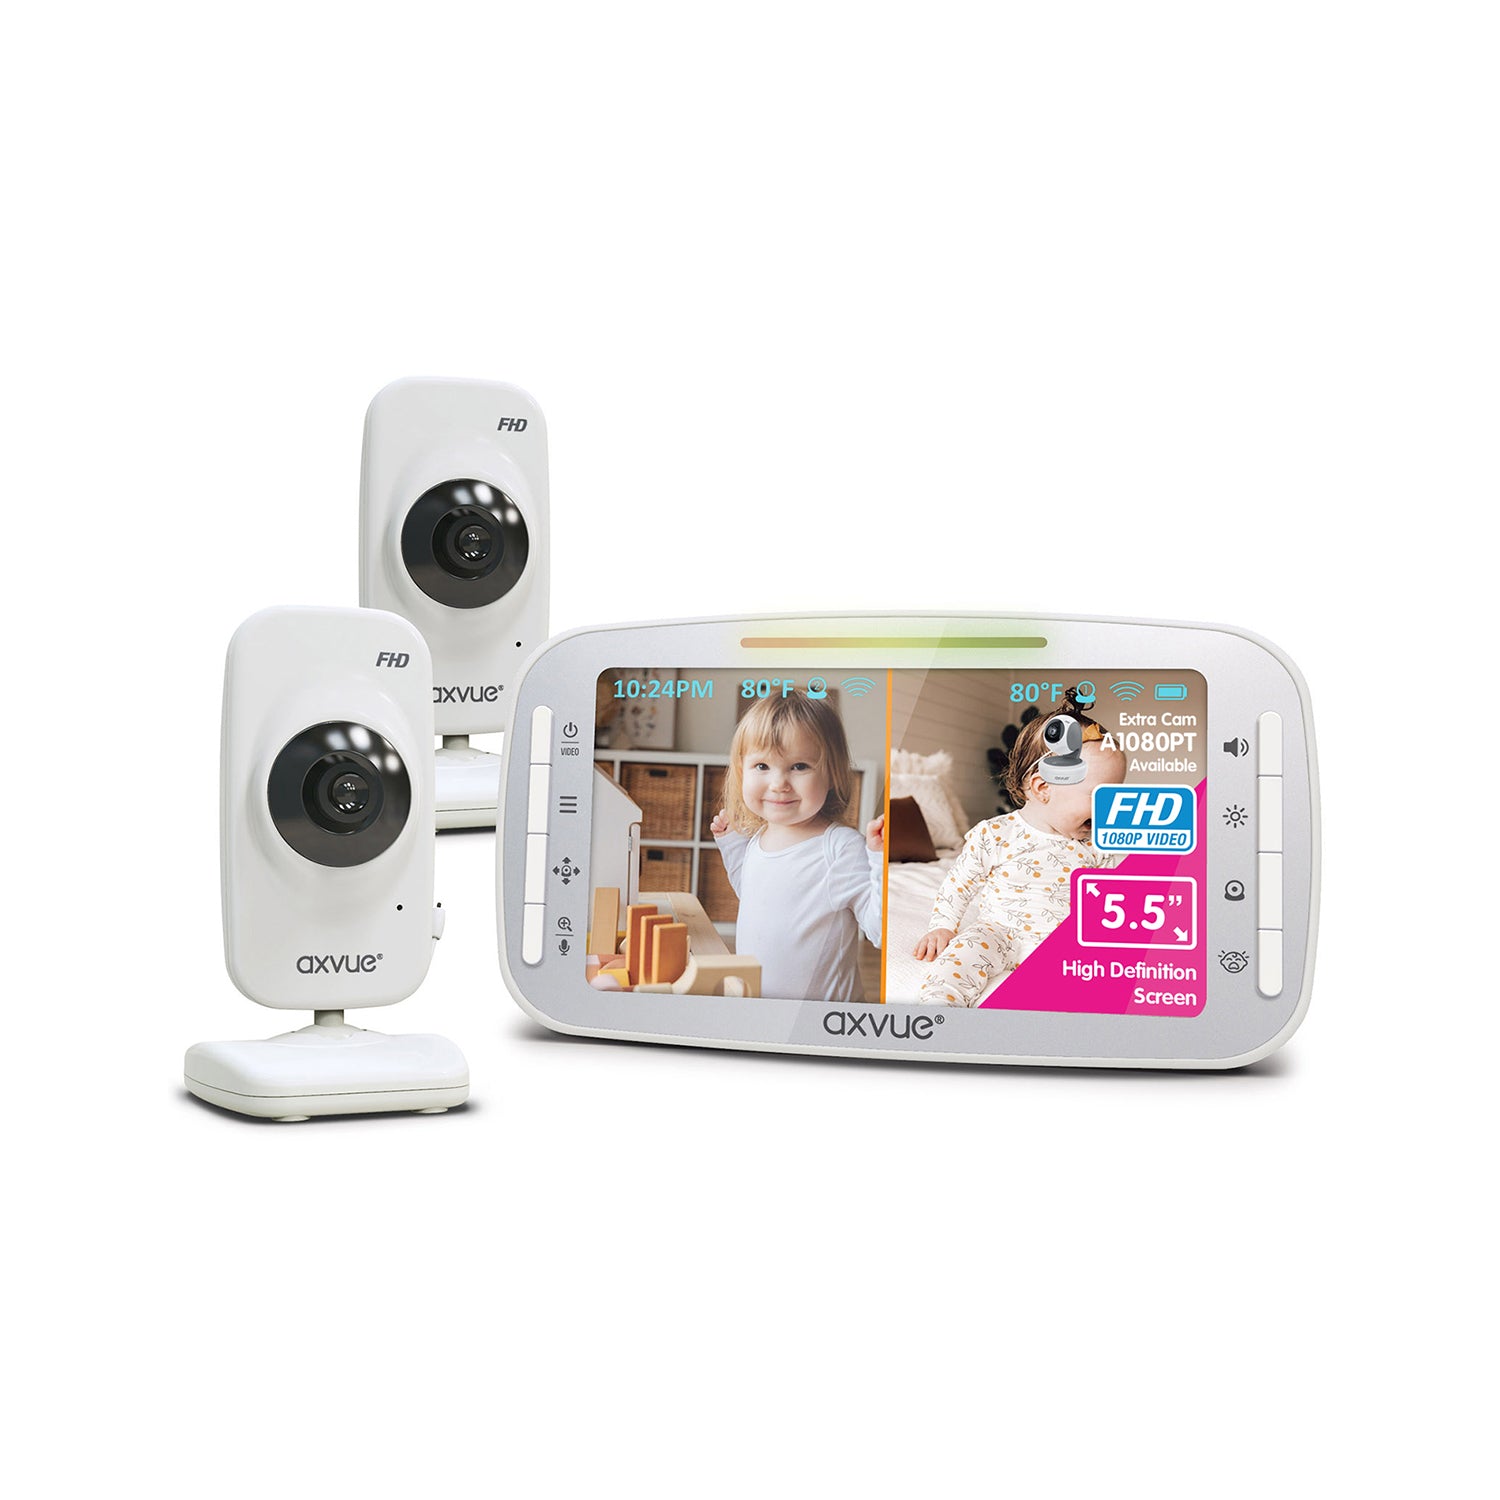 AXVUE A1080DU FHD Video Baby Monitor